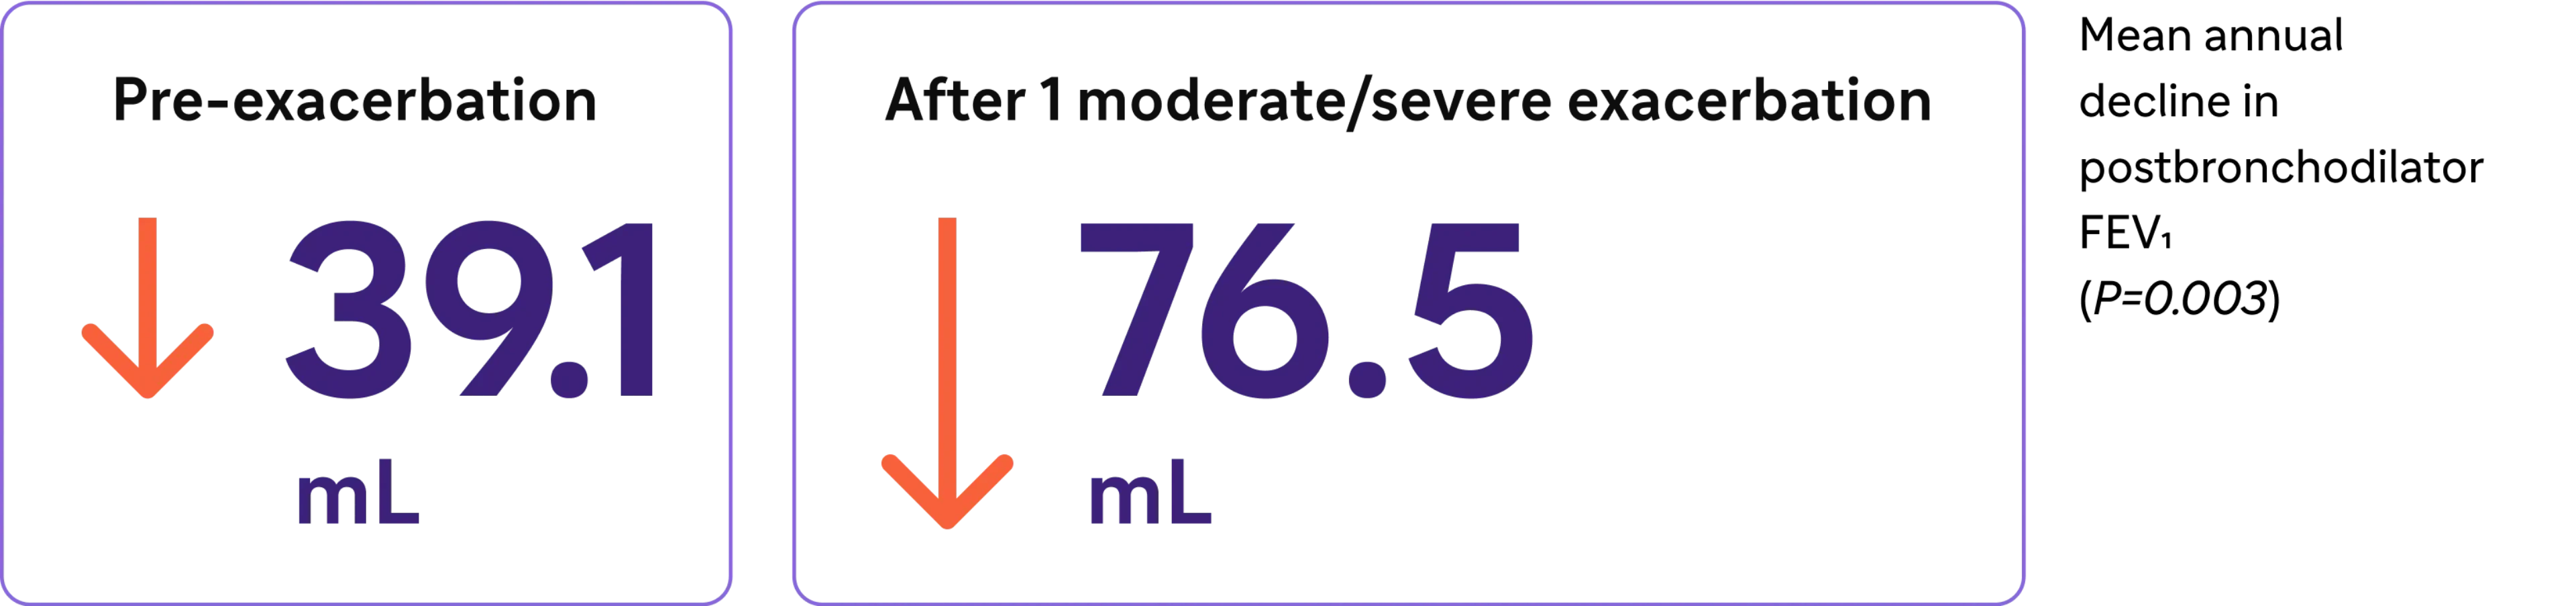 Pre-exacerbation : 39.1 mL. After 1 moderate/severe exacerbation : 76.5mL